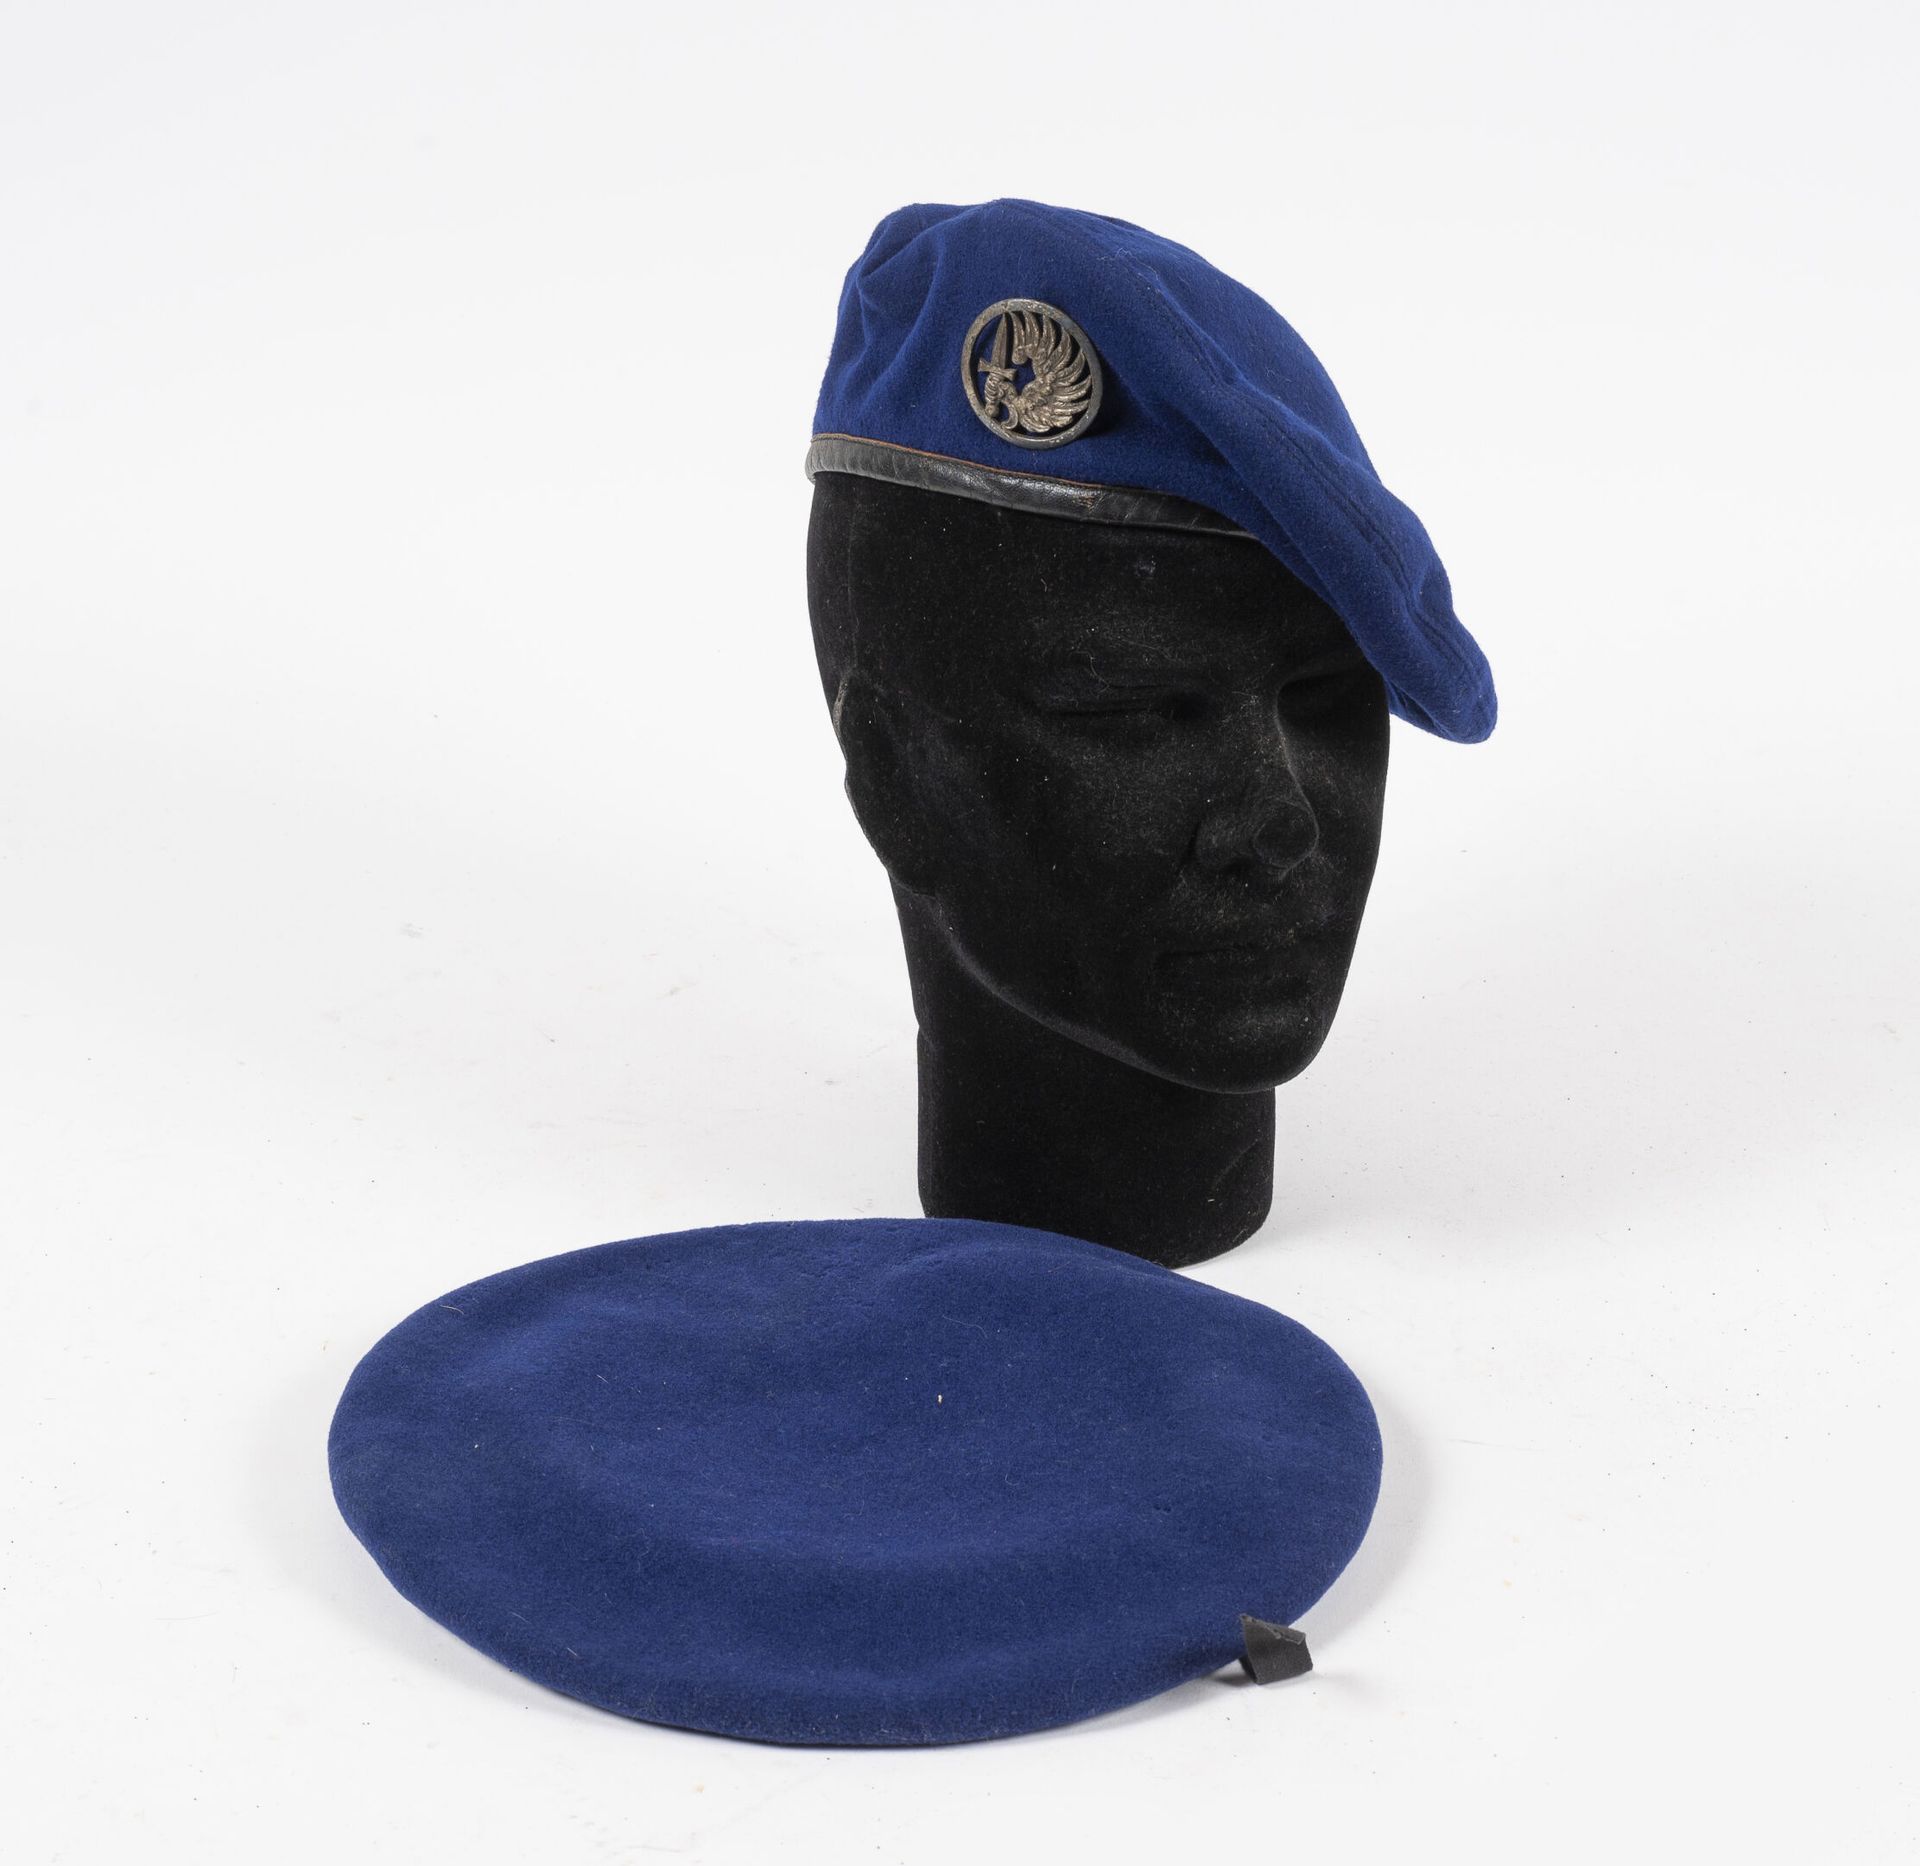 Null 一套2顶蓝色羊毛地铁跳伞员贝雷帽。

-一个由三部分组成的突击队模型，由Desfosses-Paris制作，带有徽章。

-一个伞兵轻骑兵模型，由Bl&hellip;